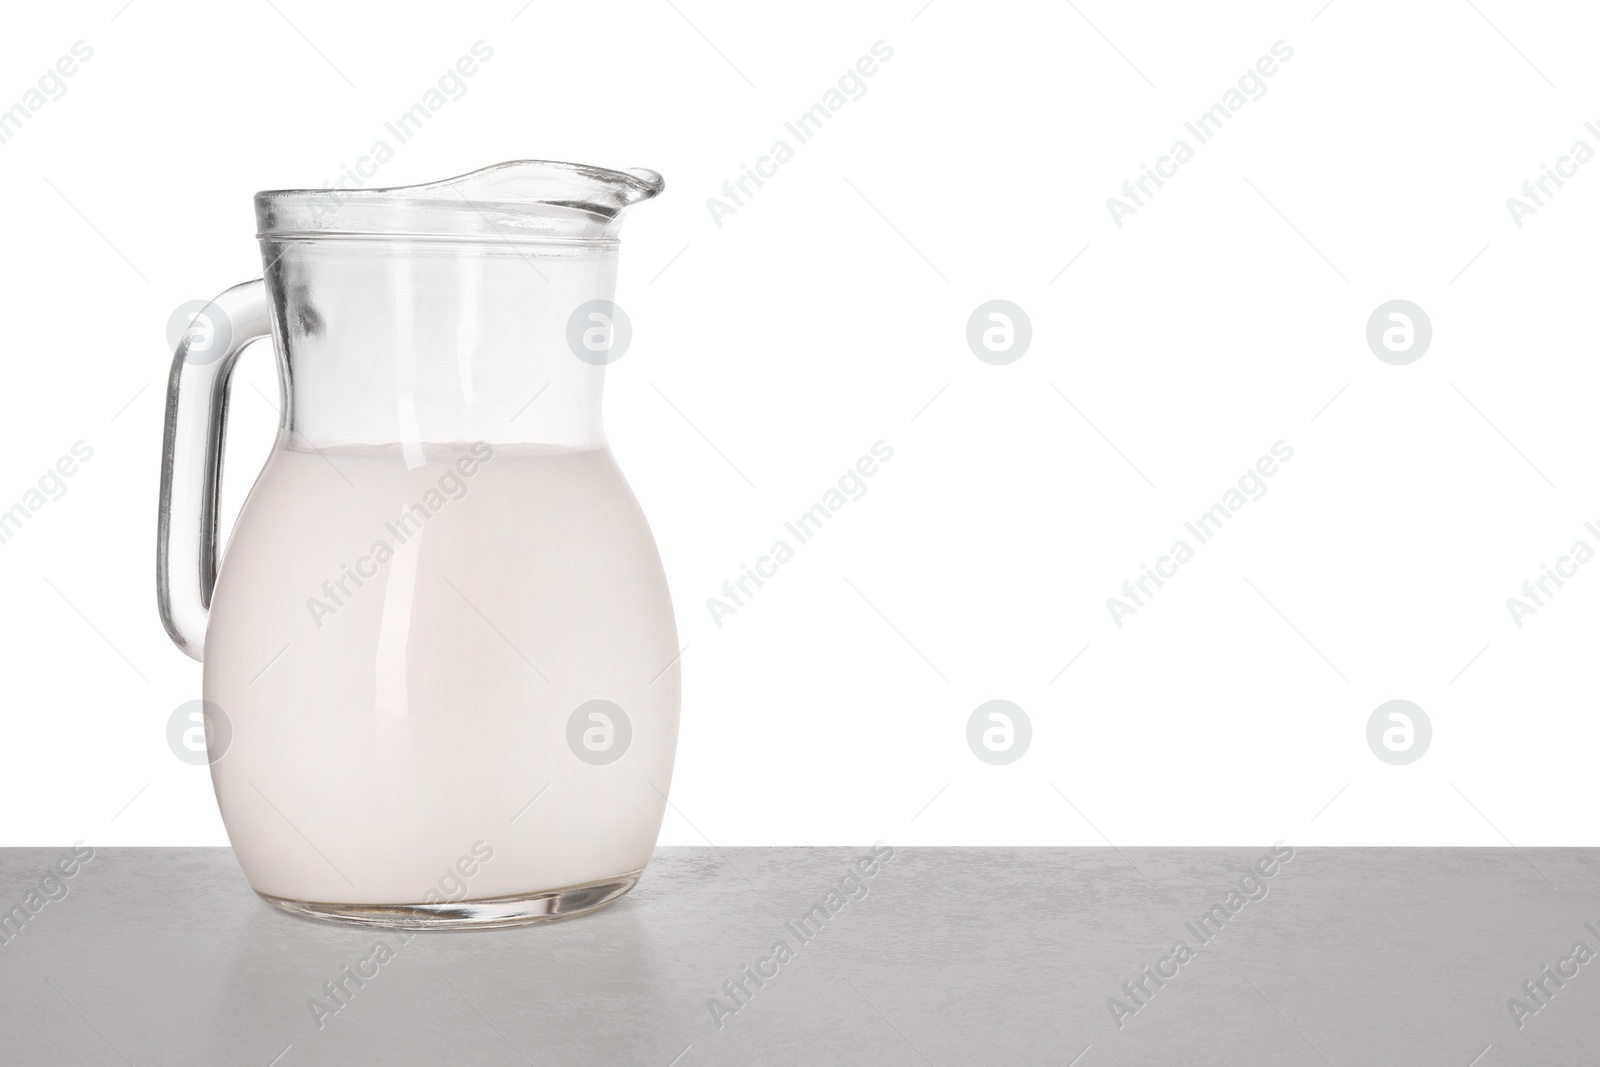 Photo of Jug of tasty milk on light table against white background